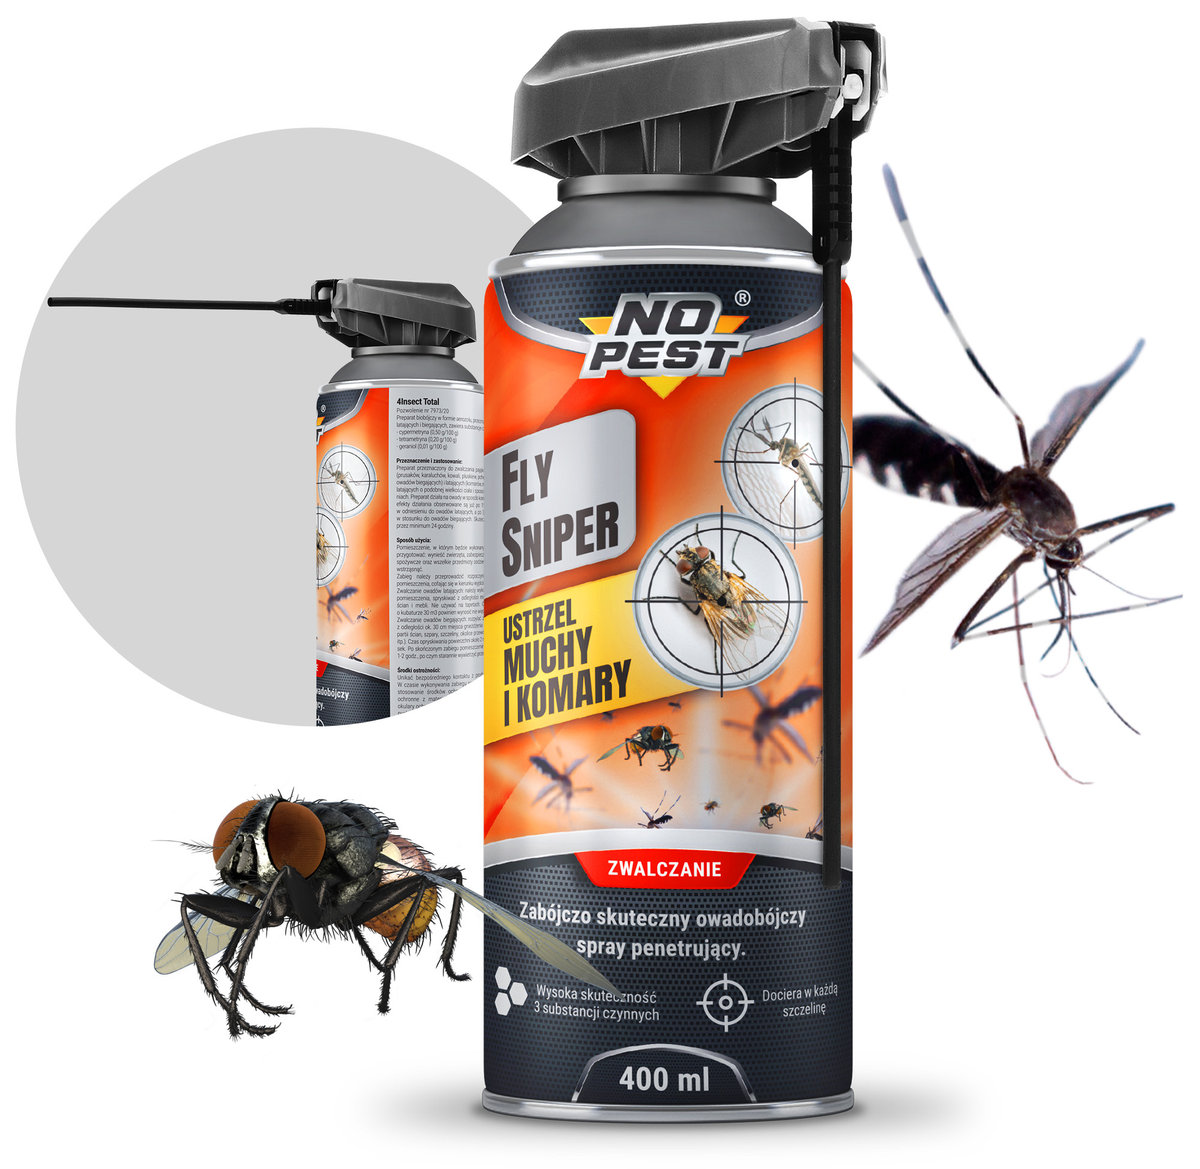 Фото - Відлякувачі комах і тварин CMY Aerozol NO PEST na Muchy i Komary 400ml Fly Sniper Środek Preparat Spray P 